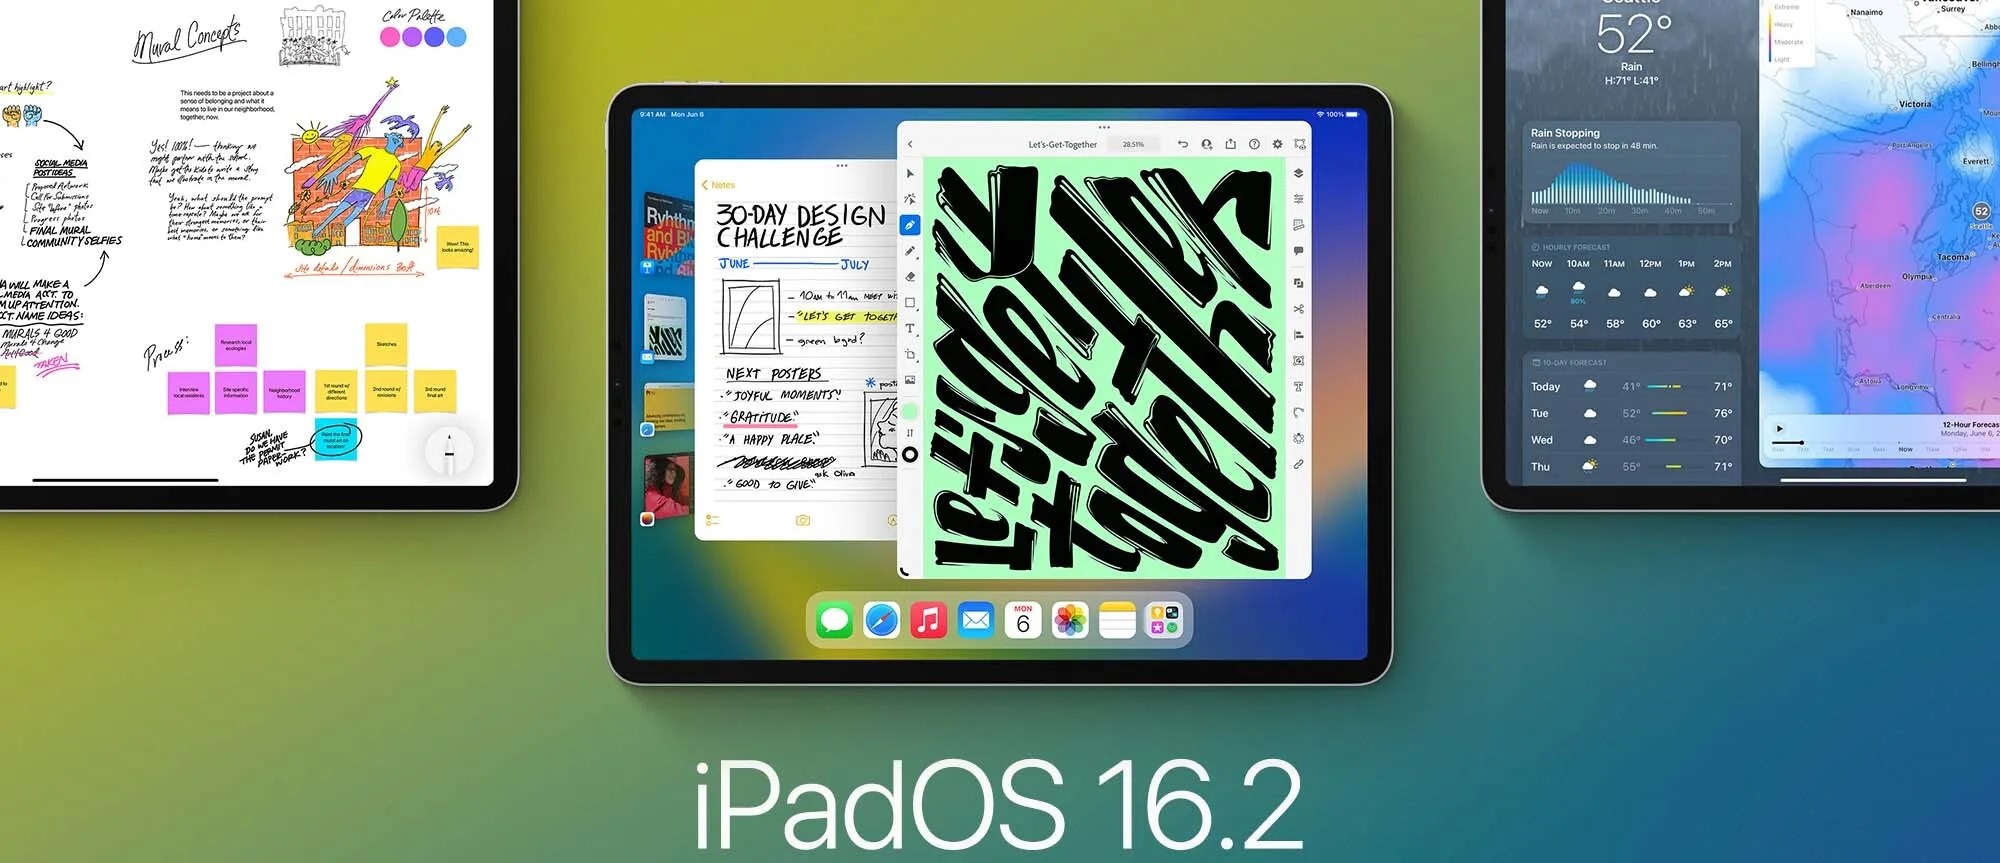 iPadOS 16.2 alan cihazlar